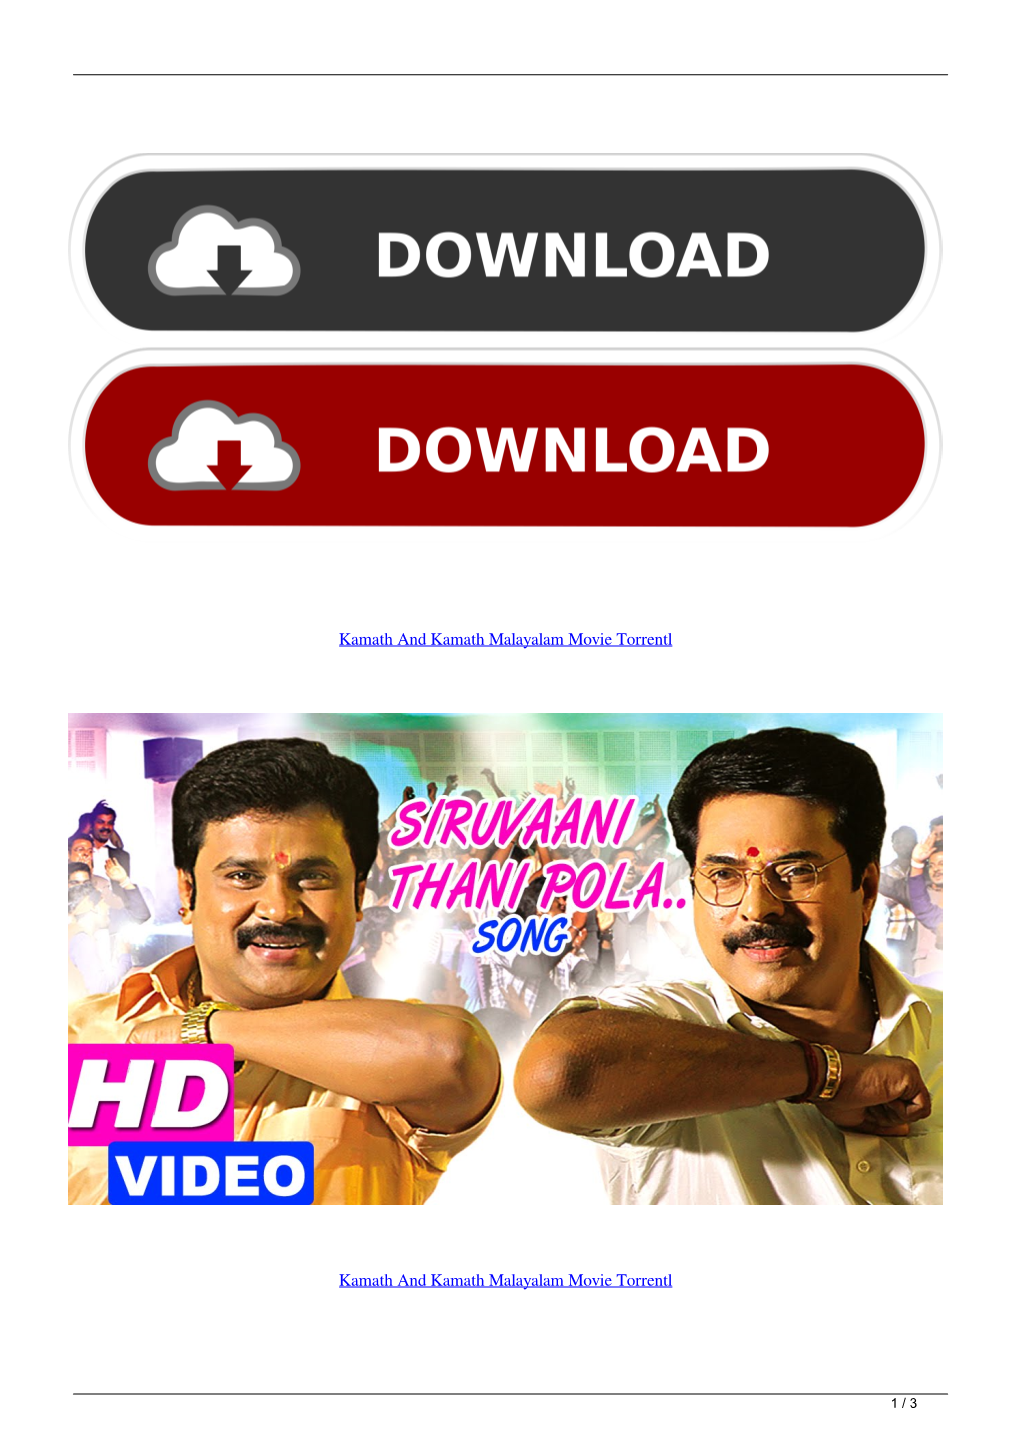 Kamath and Kamath Malayalam Movie Torrentl